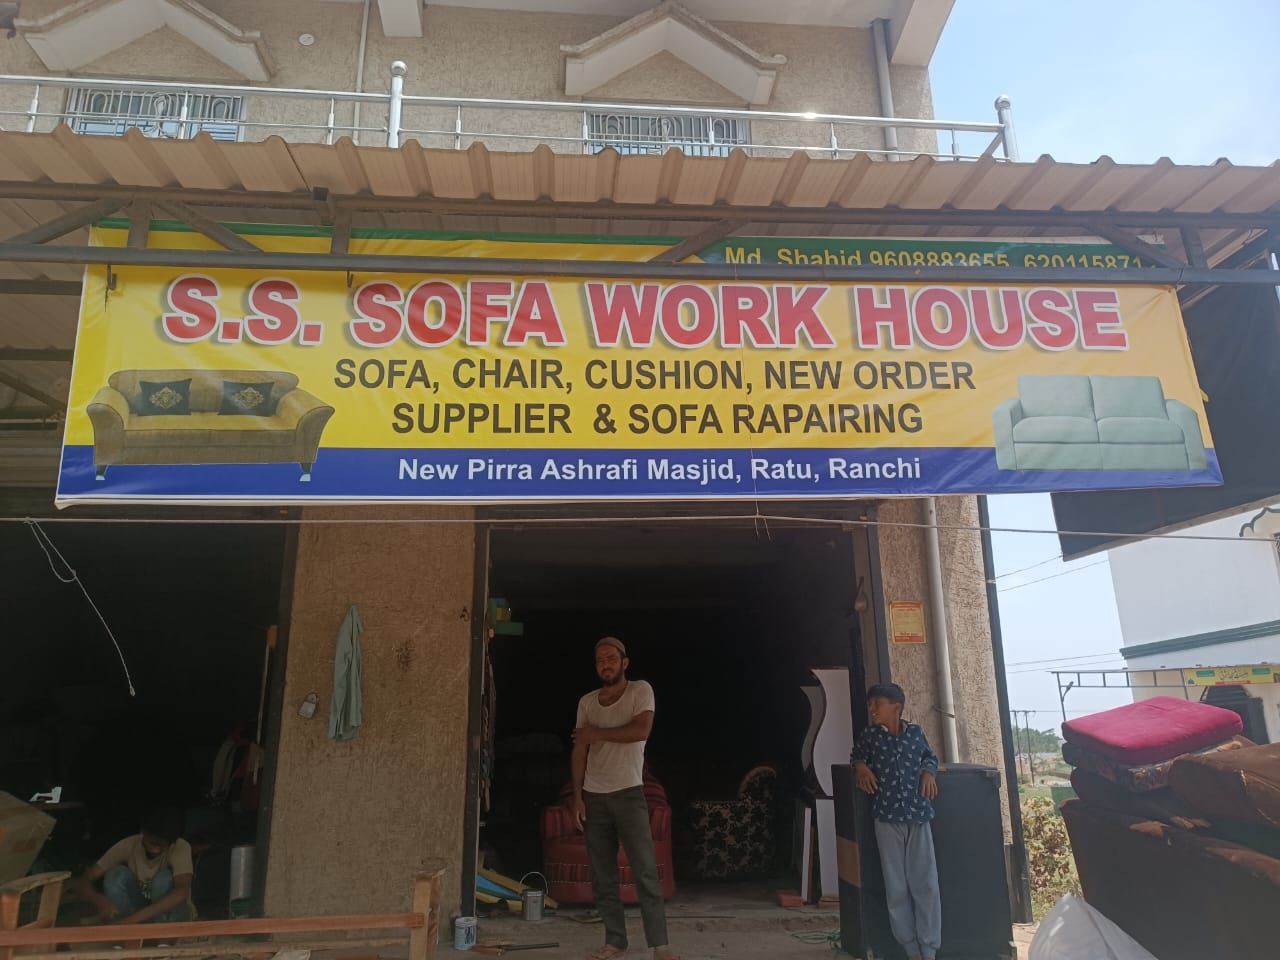 S S SOFA WORK HOUSE IN RATU RANCHI